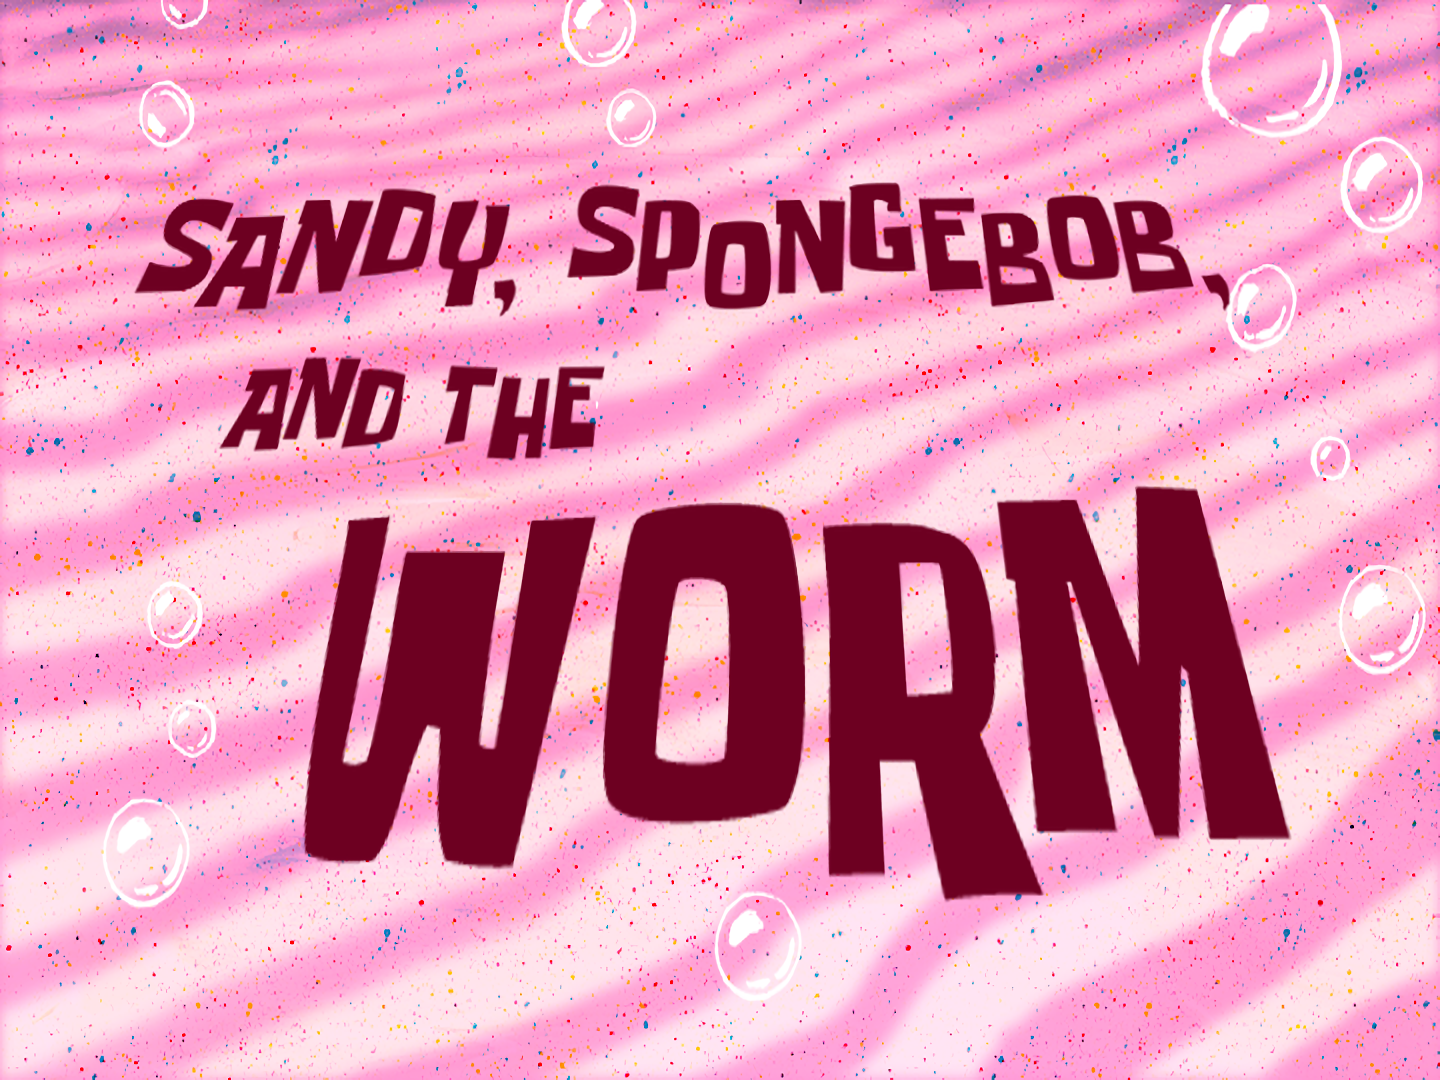 spongebob season 9 dailymotion